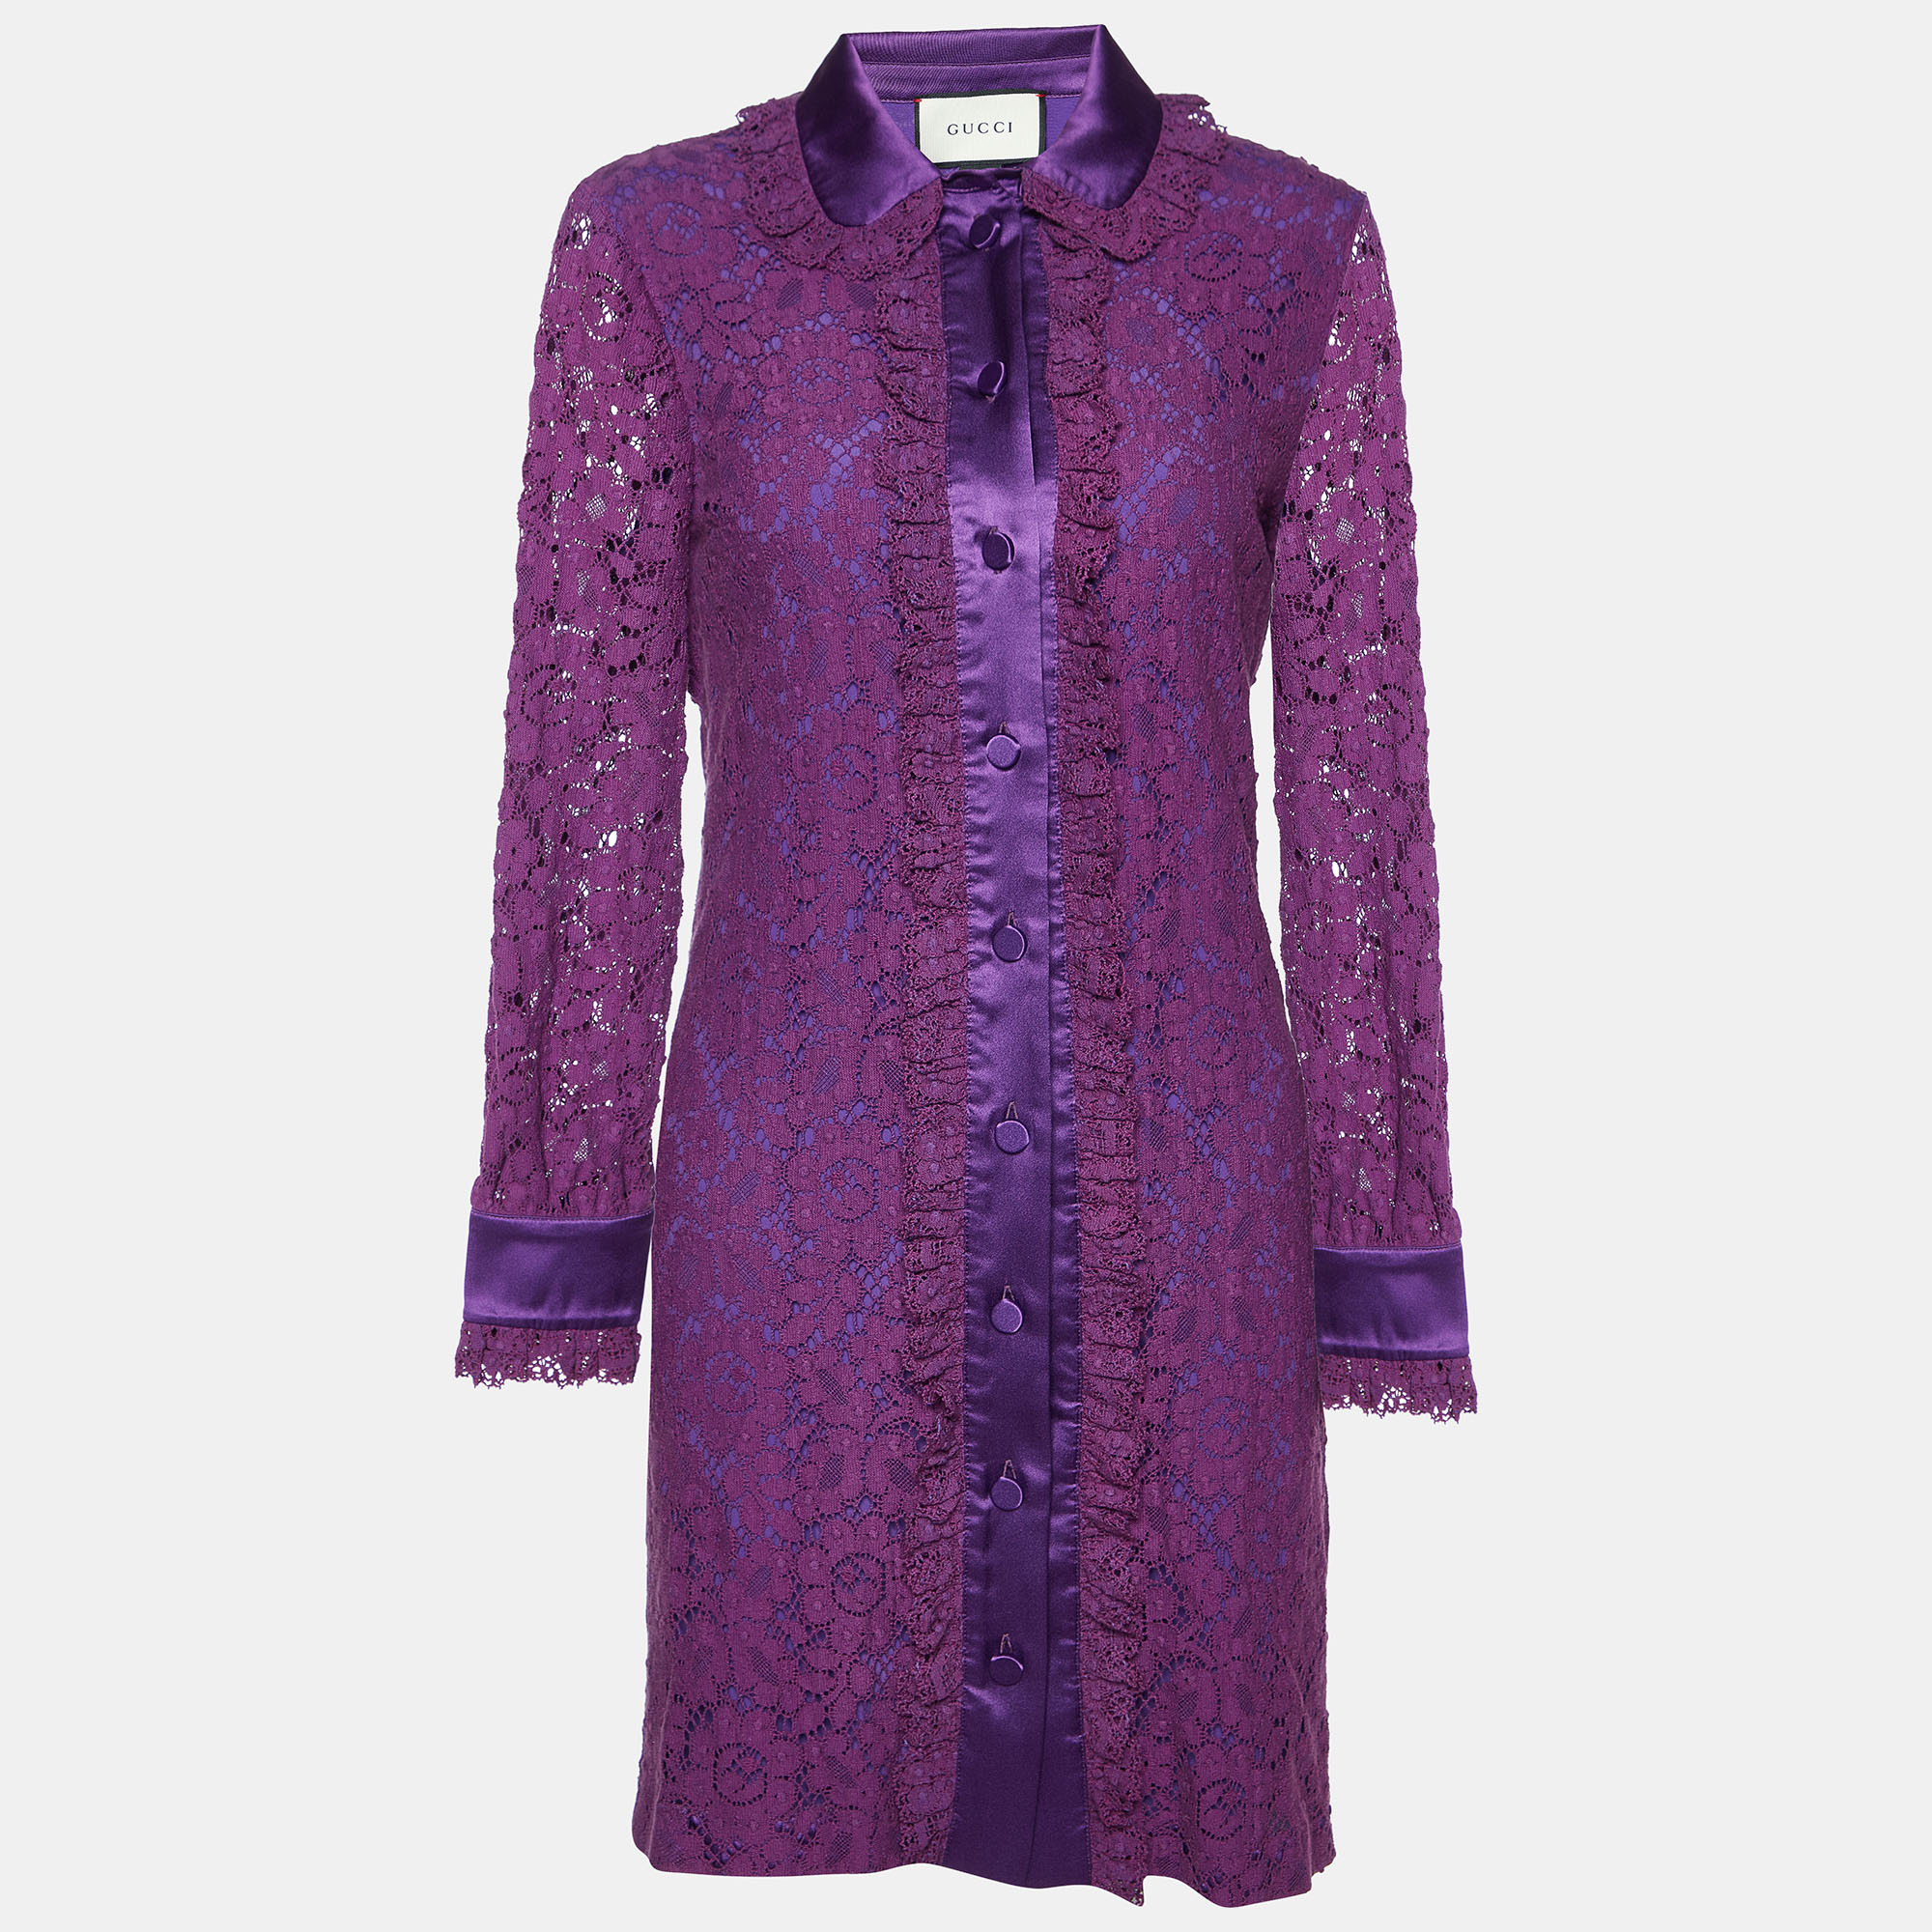 Gucci purple lace buttoned mini shirt dress s